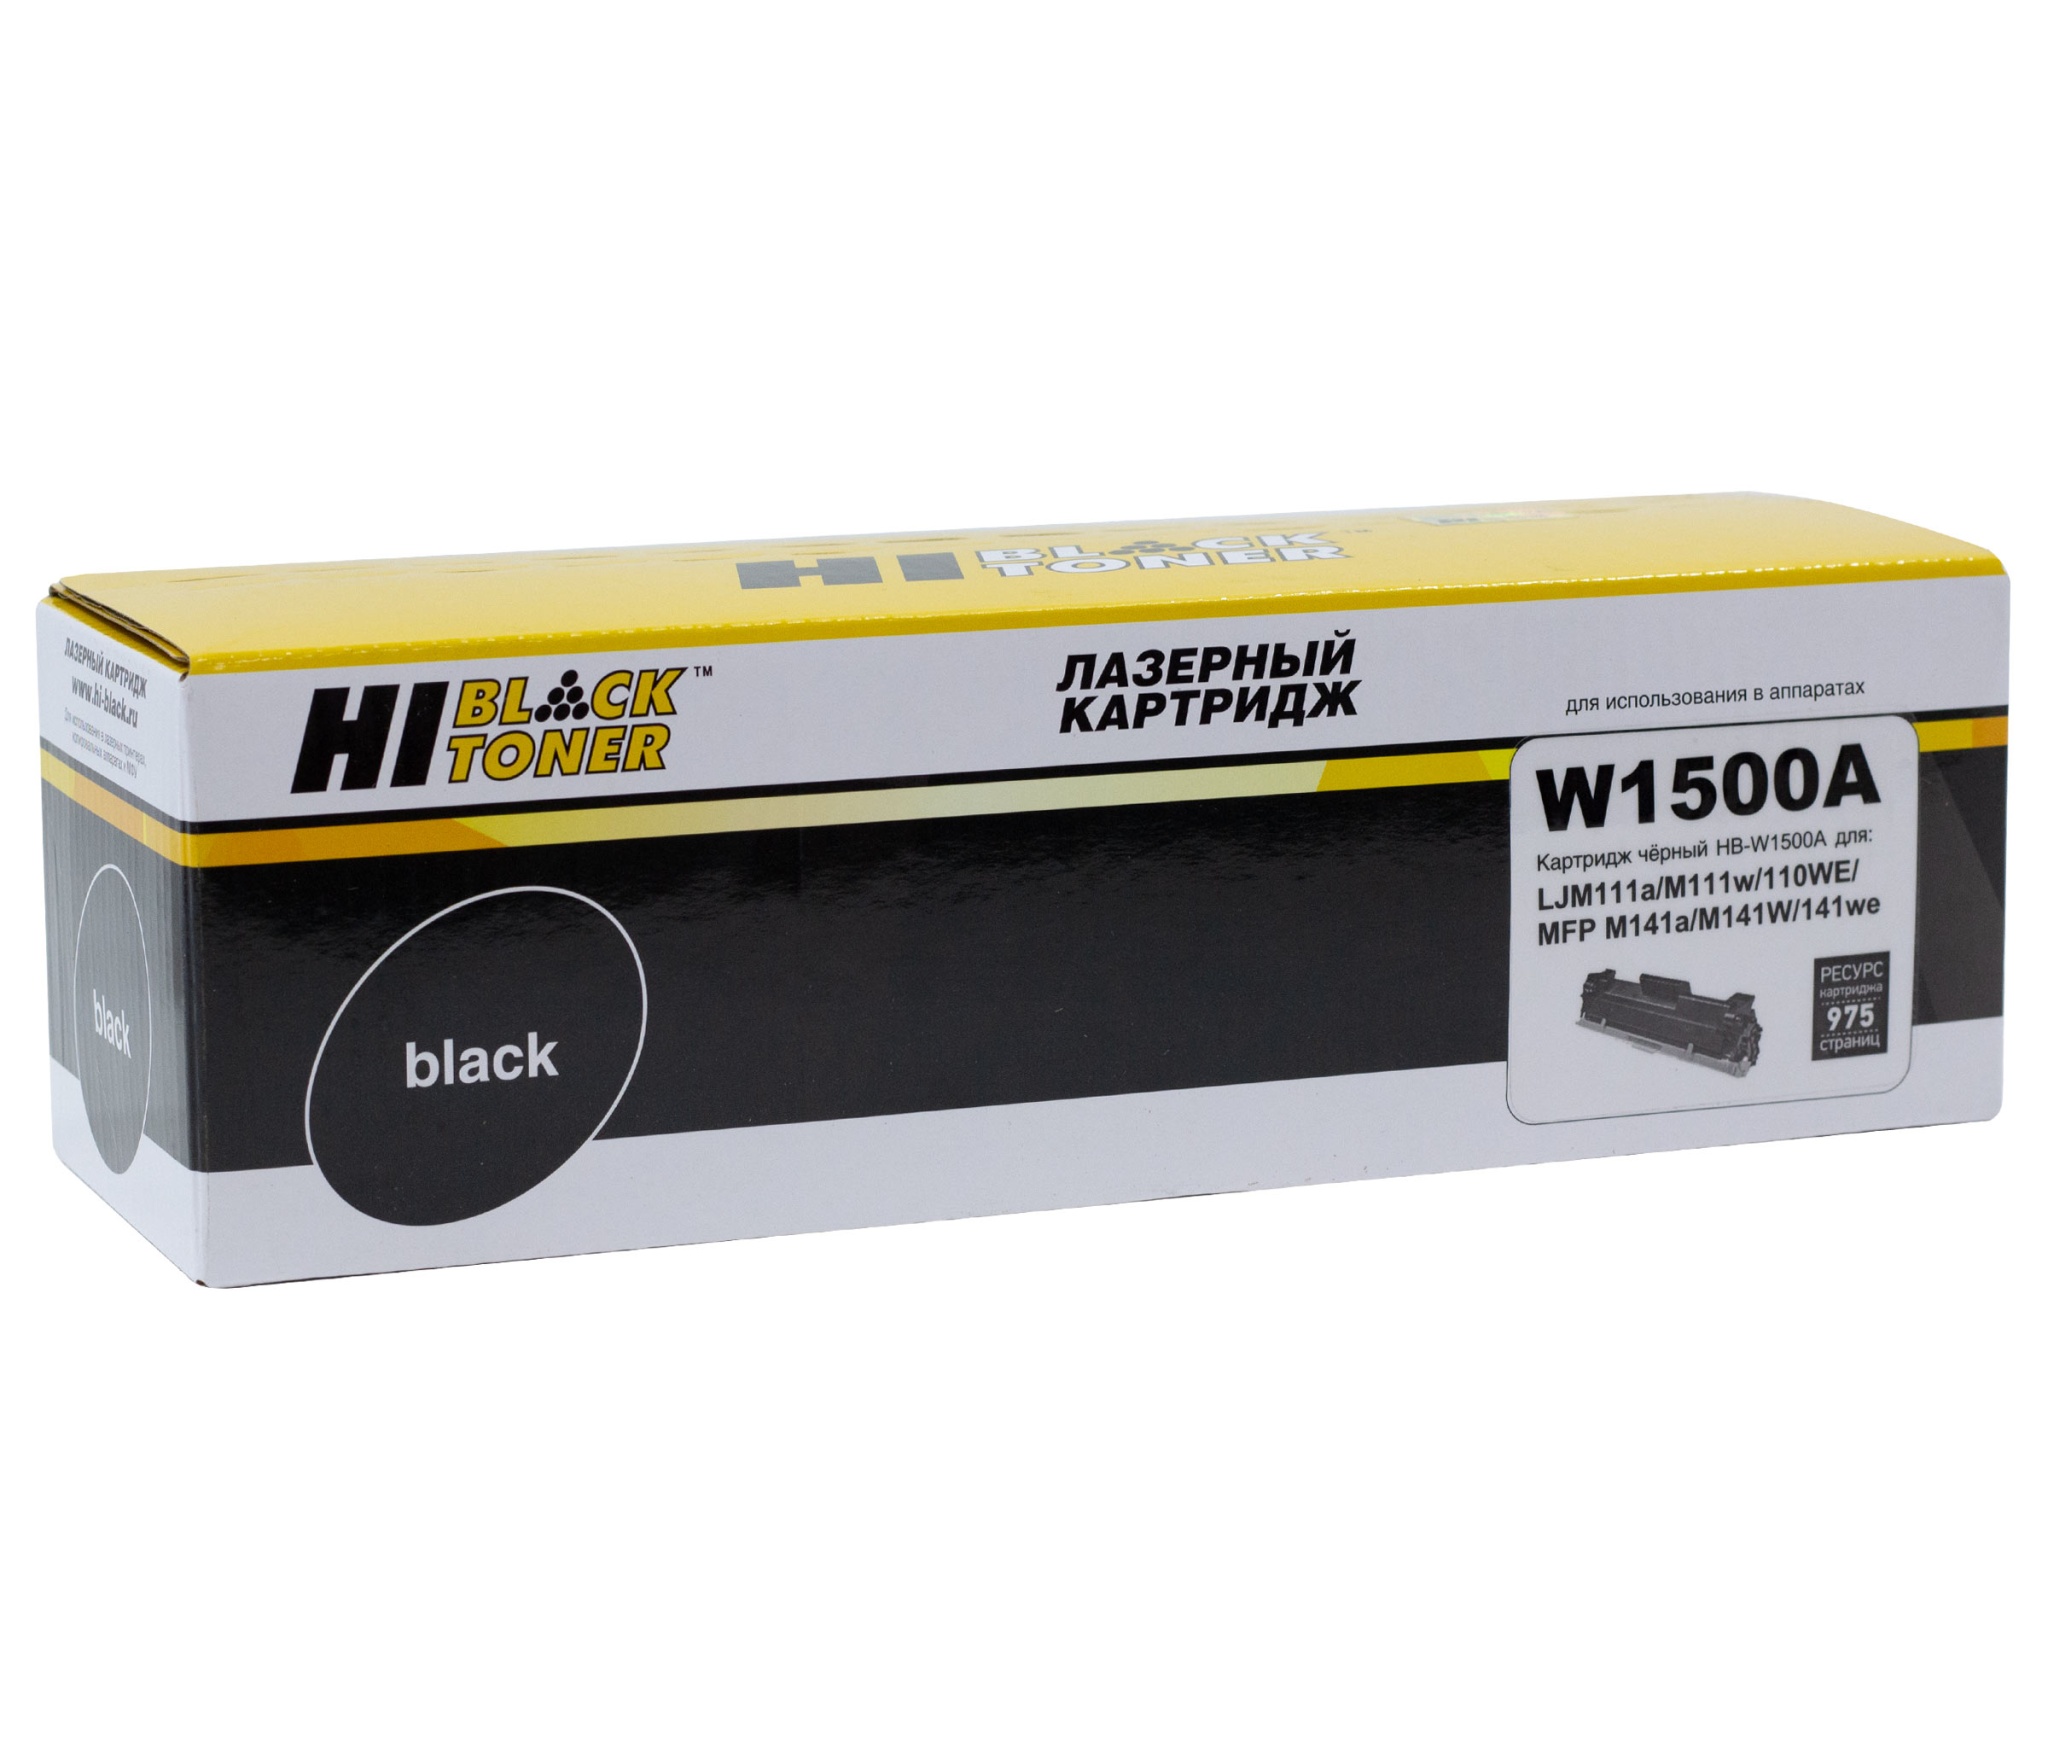 Тонер-картридж Hi-Black (HB-W1500A) для HP LJ M111a/ M141a, (с чипом), чёрный (975 стр.)